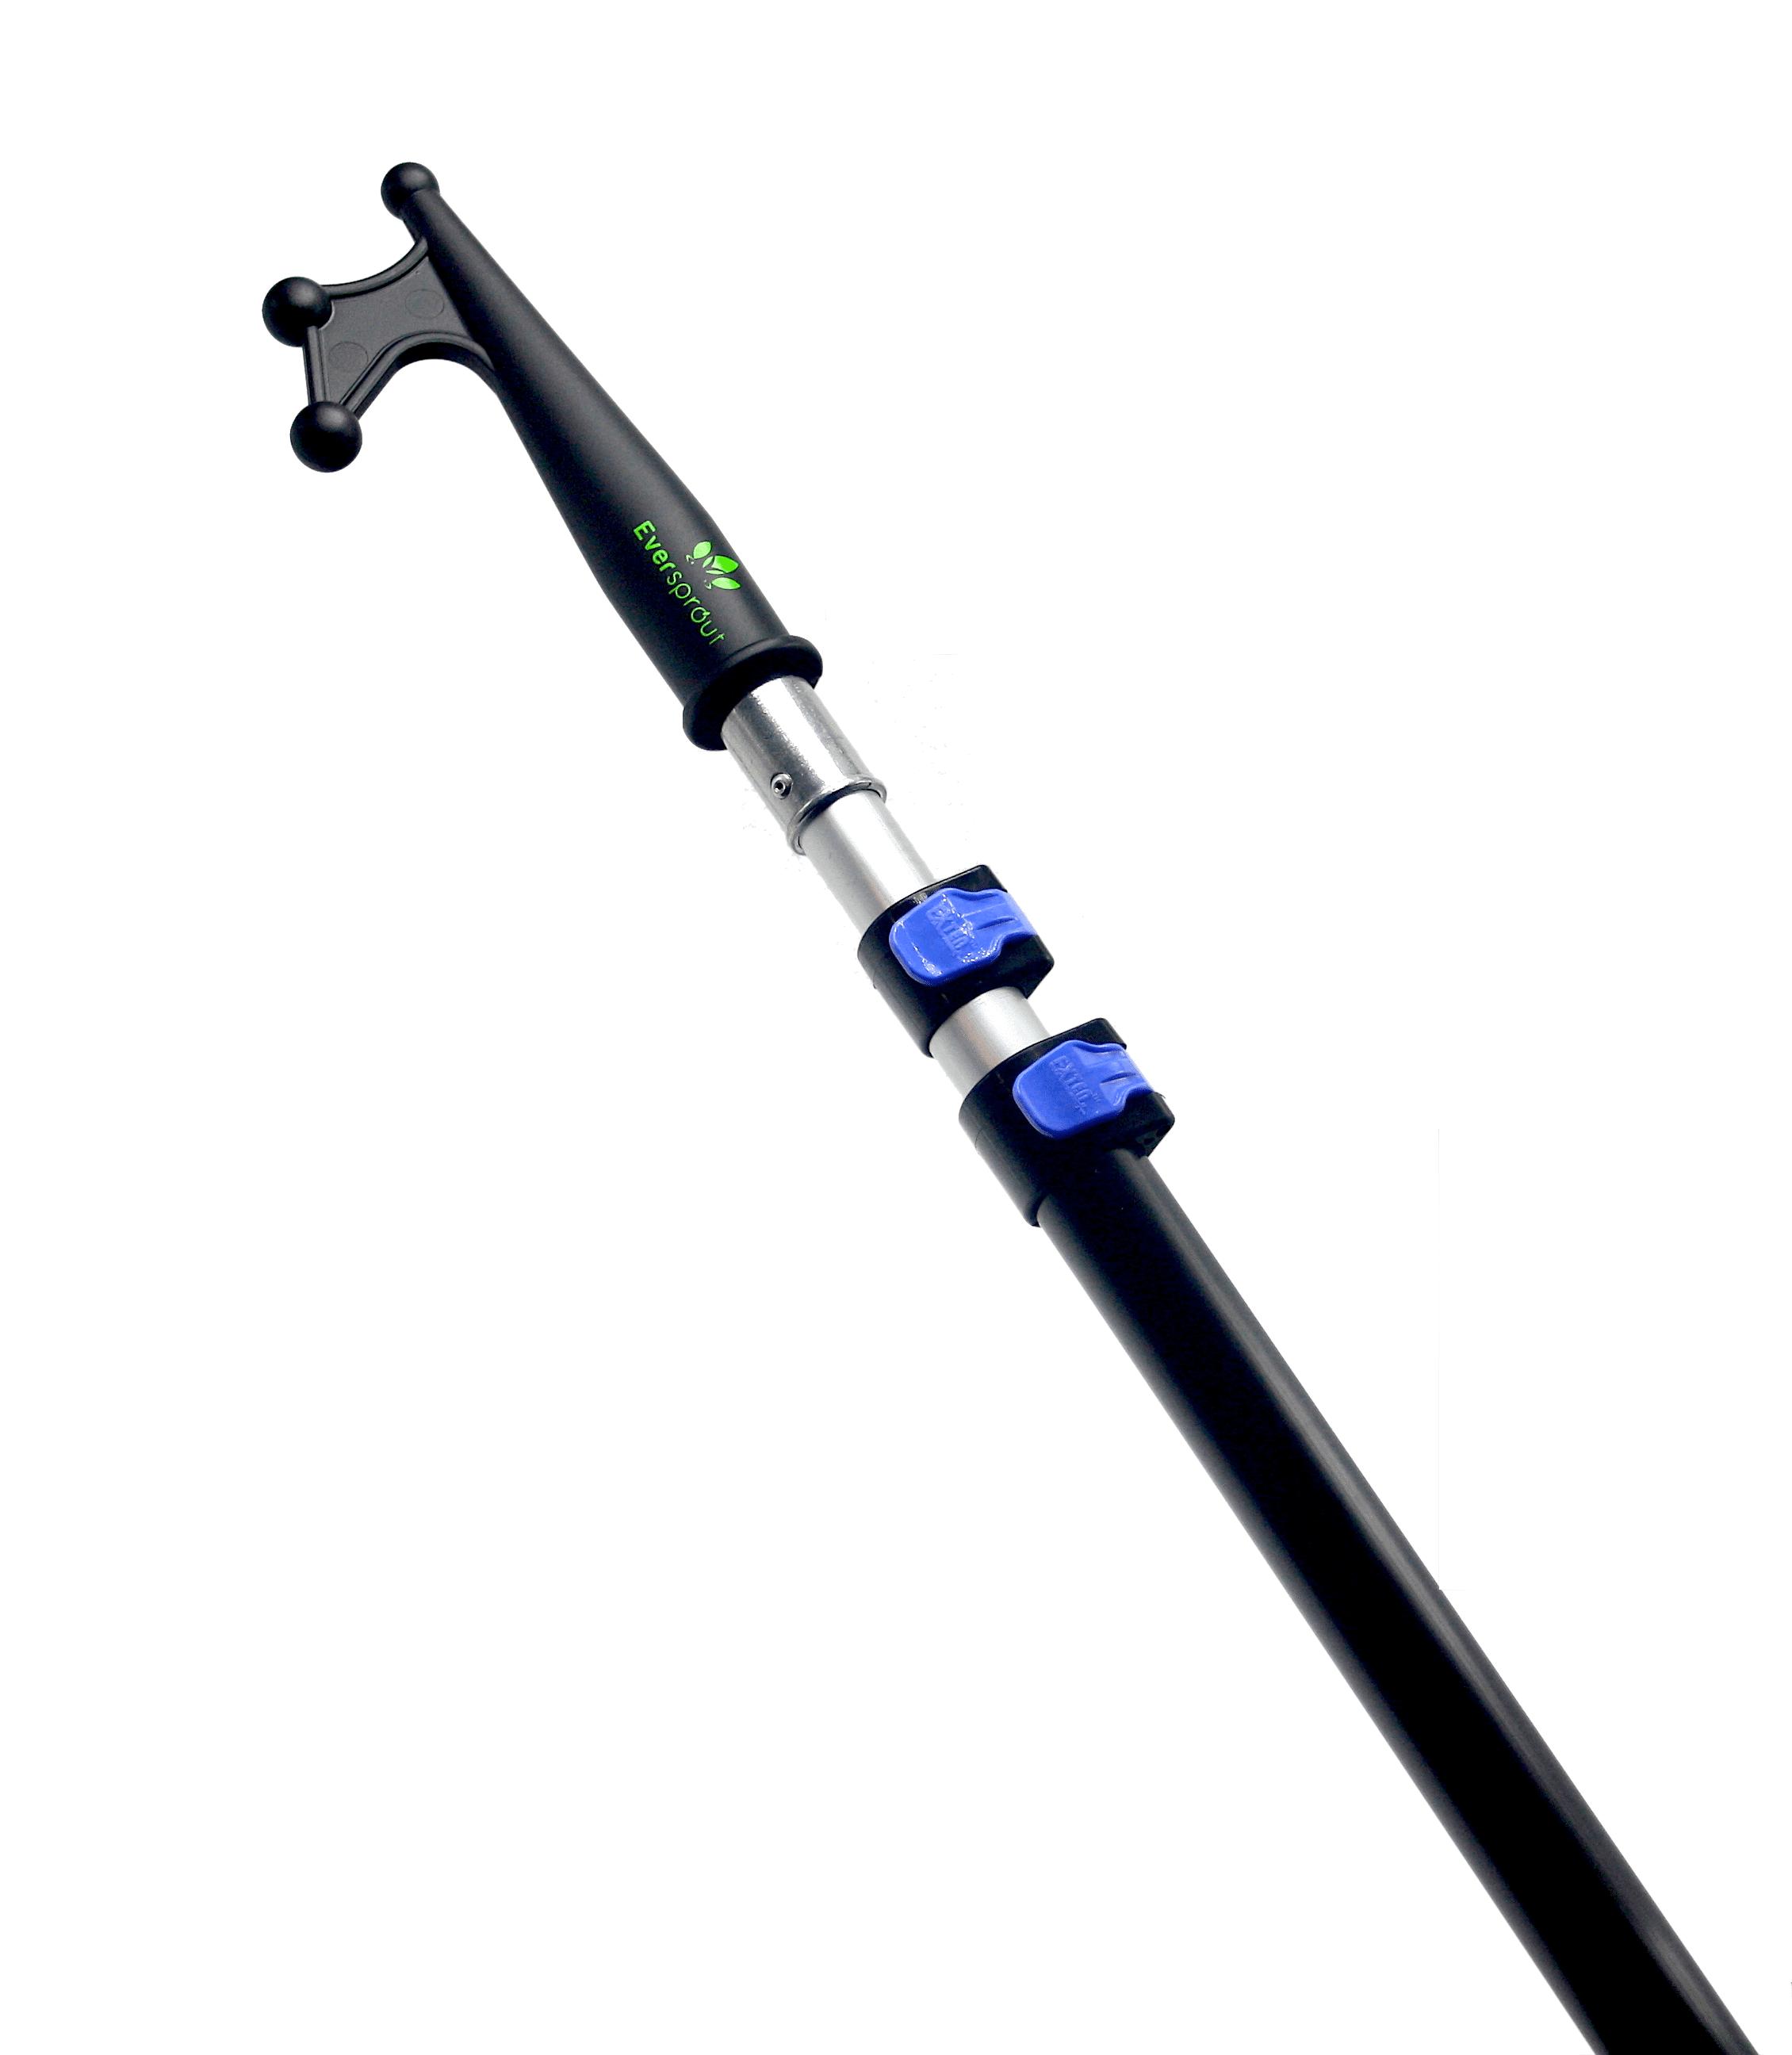 Mustad 3551BR-8-25 Bronze Ringeye Sport Treble Hooks, Size 8 - Box of 25